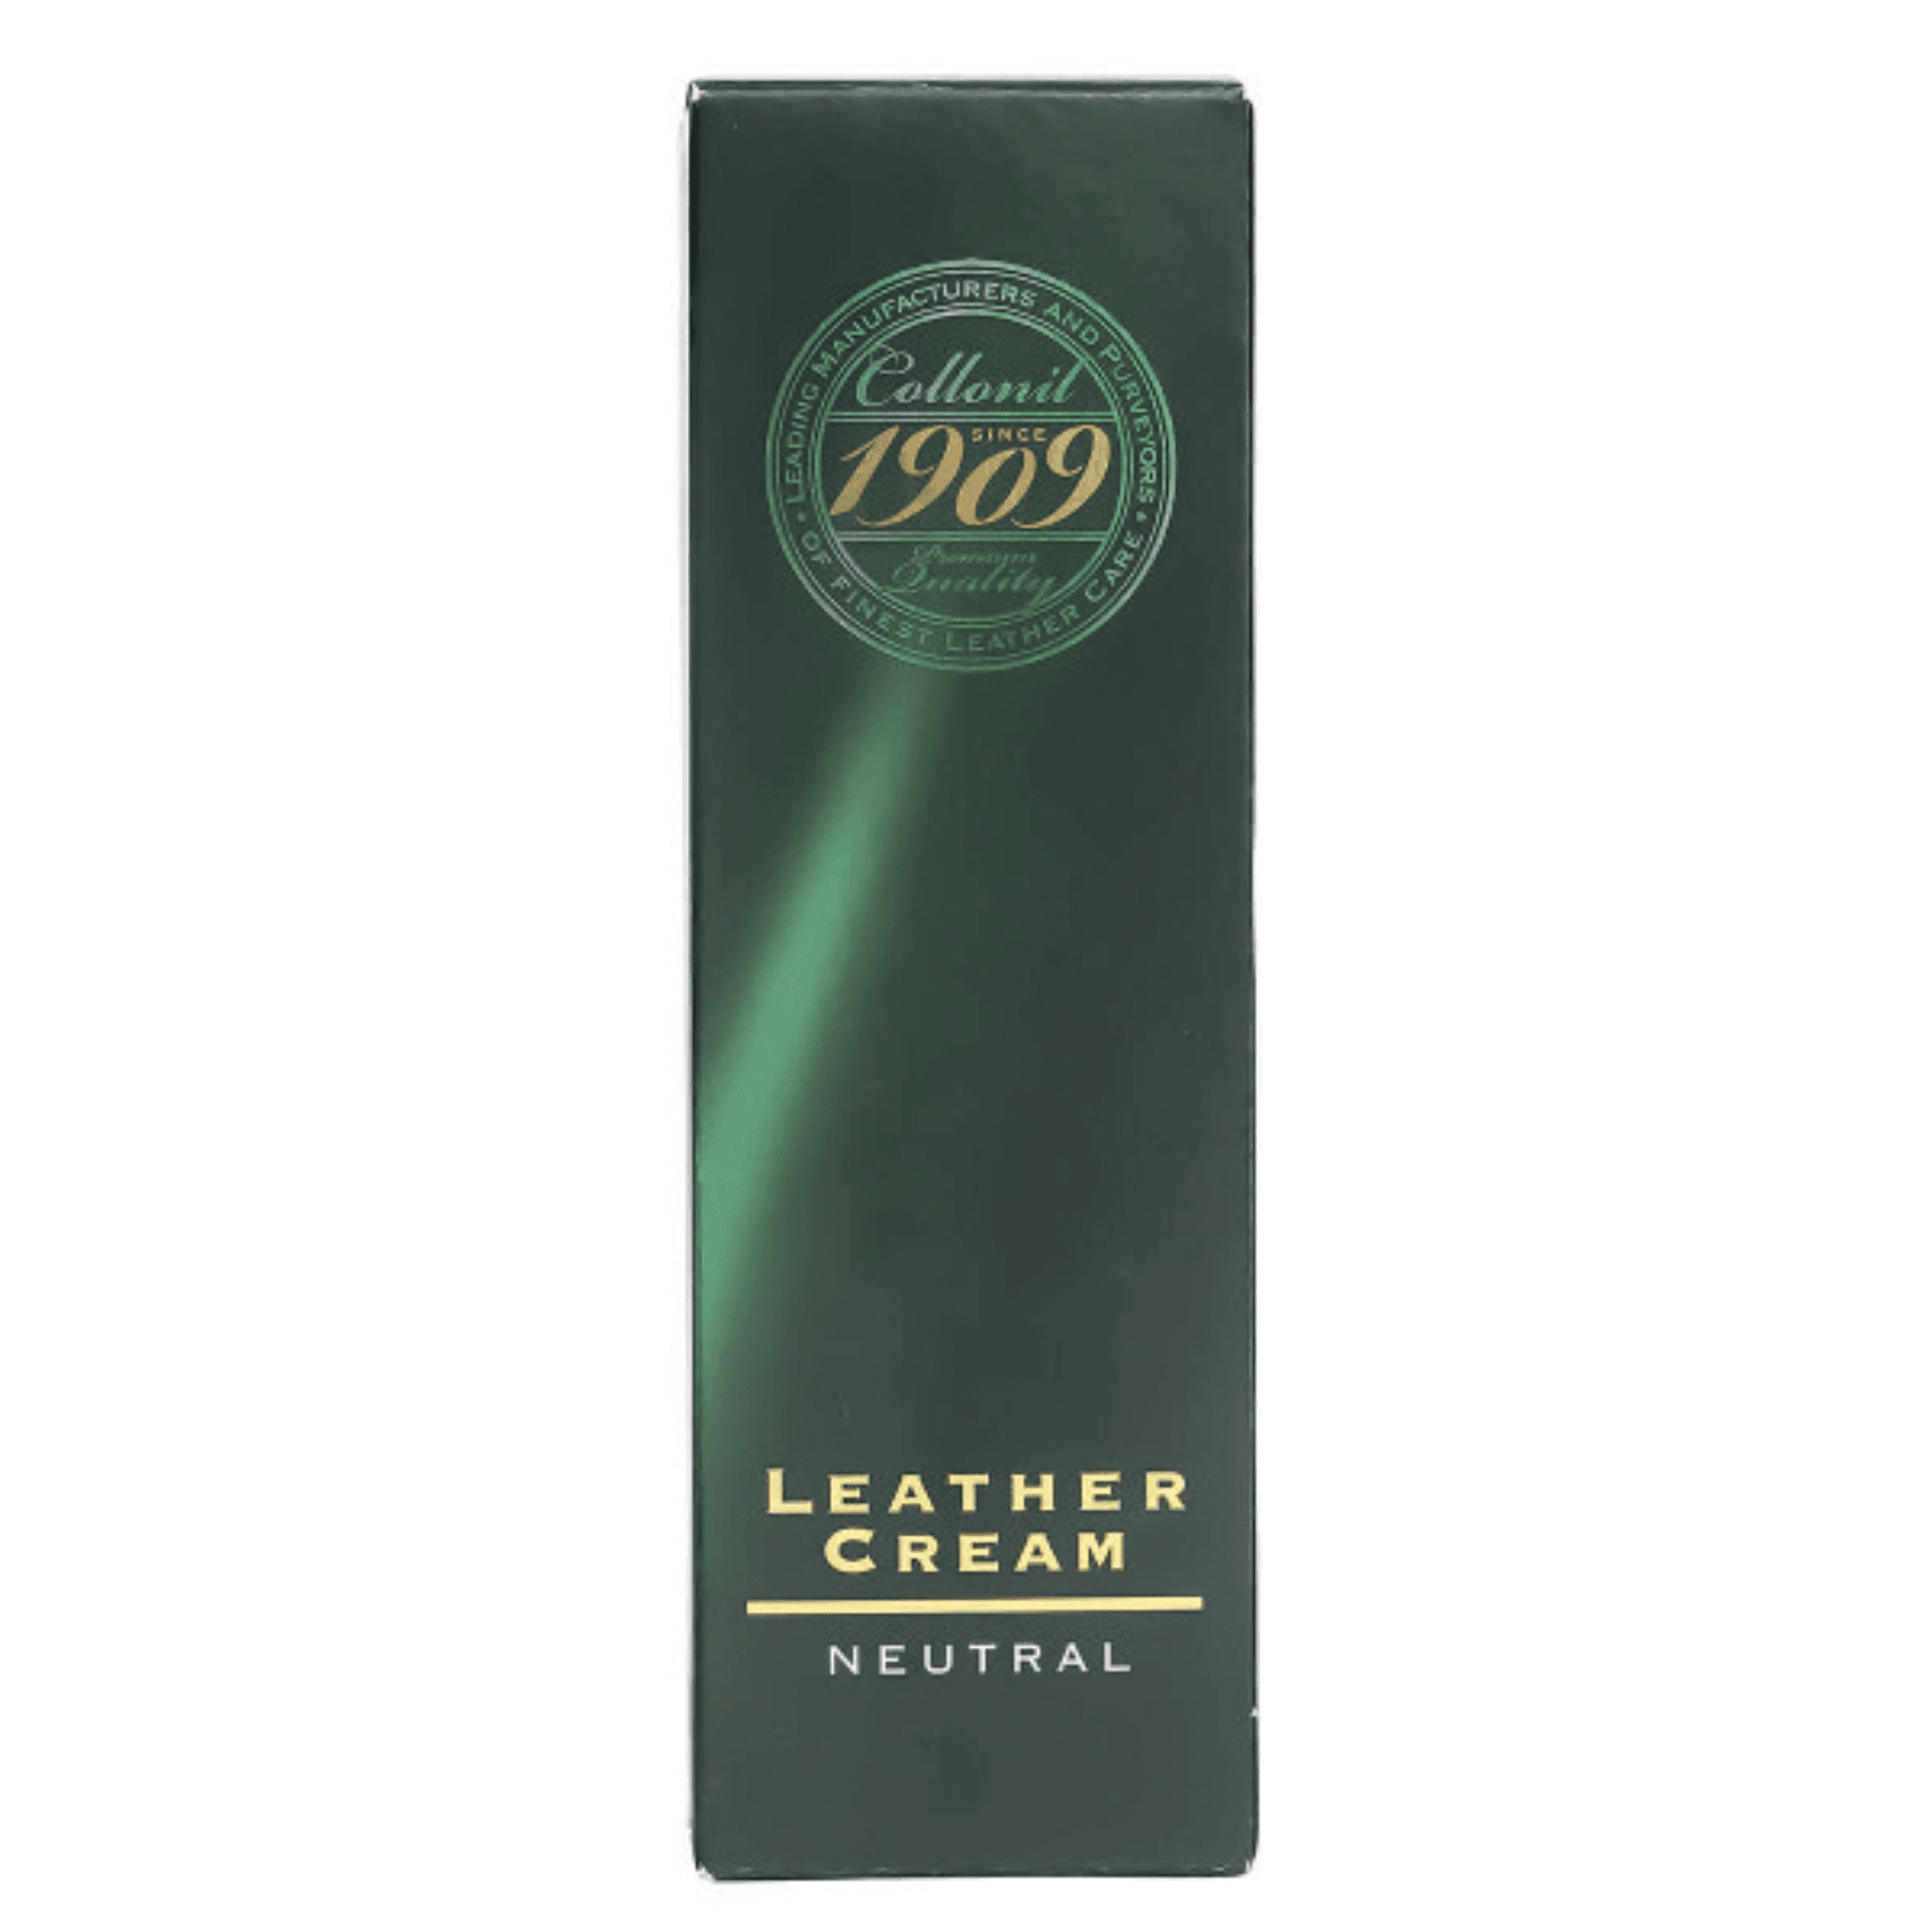 1909 Leather Cream - Pielęgnacja